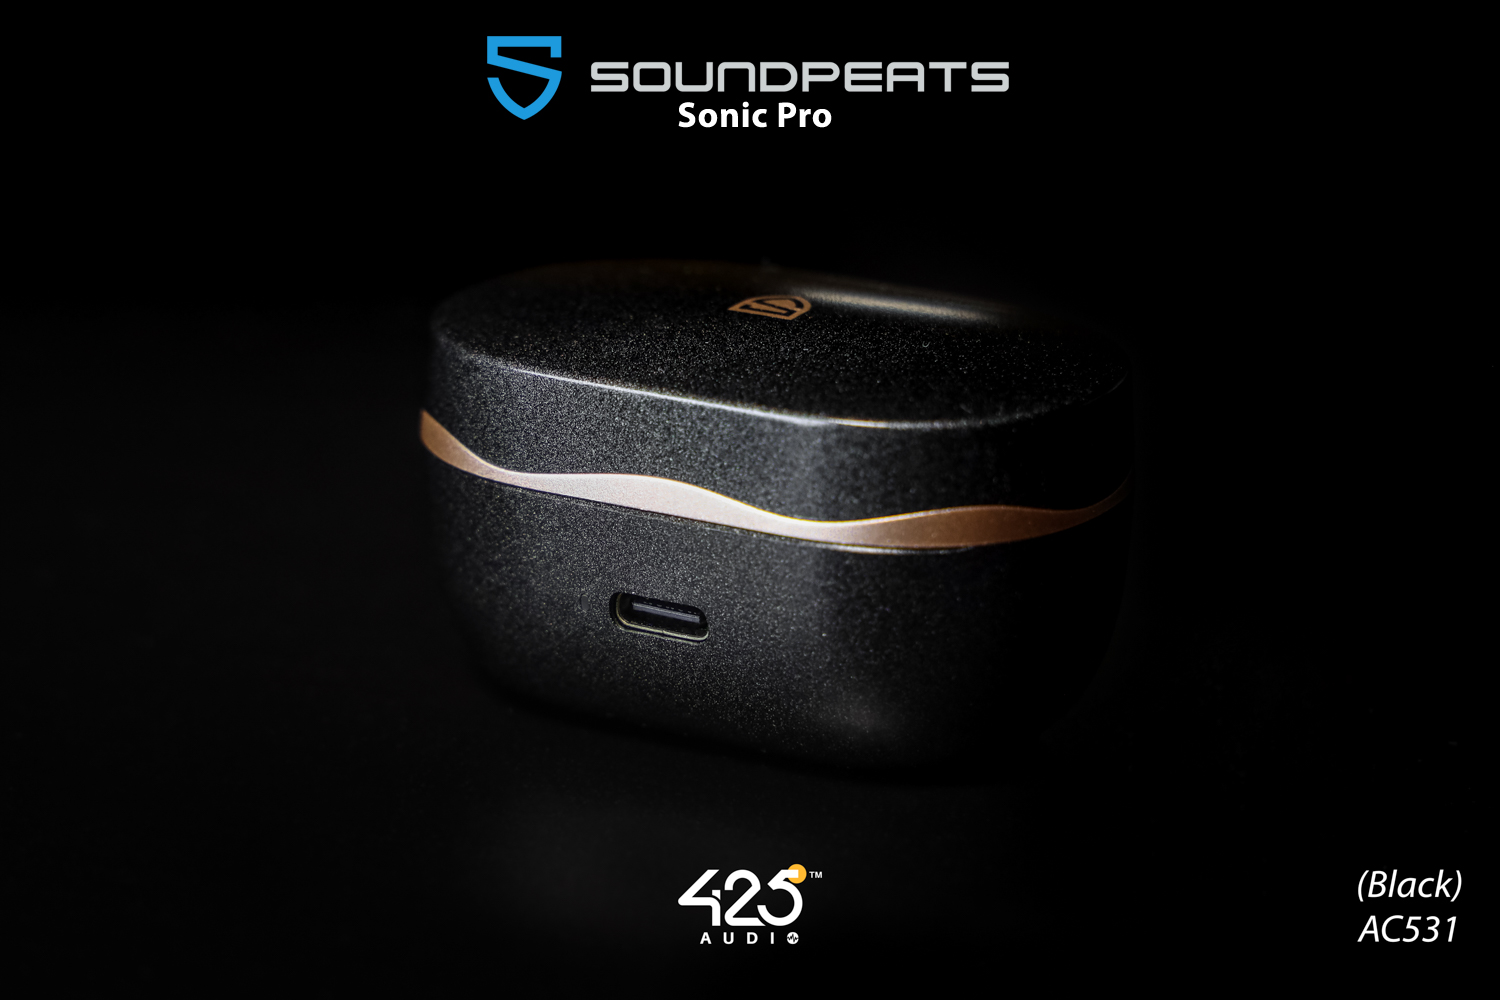 soundpeats sonic pro,soundpeats,black,bluetooth,5.2,aptx adaptive,dual ba,low latency game mode,เสียงดี,เบสหนัก